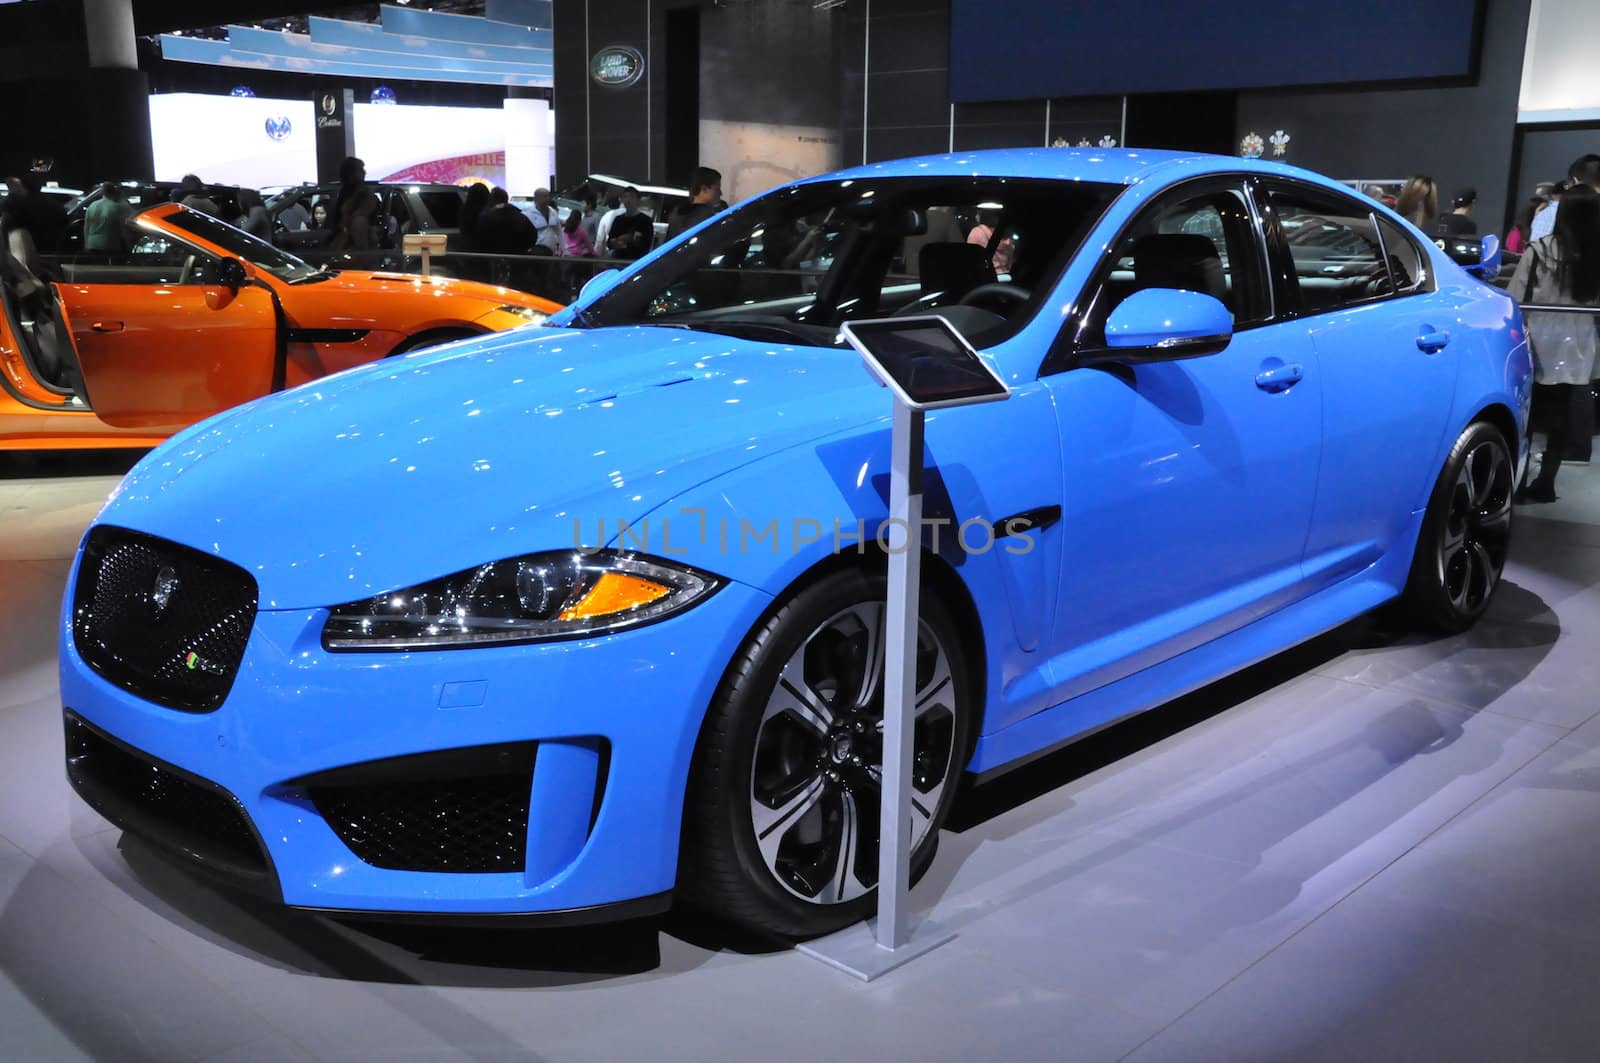 Jaguar XF at Auto Show